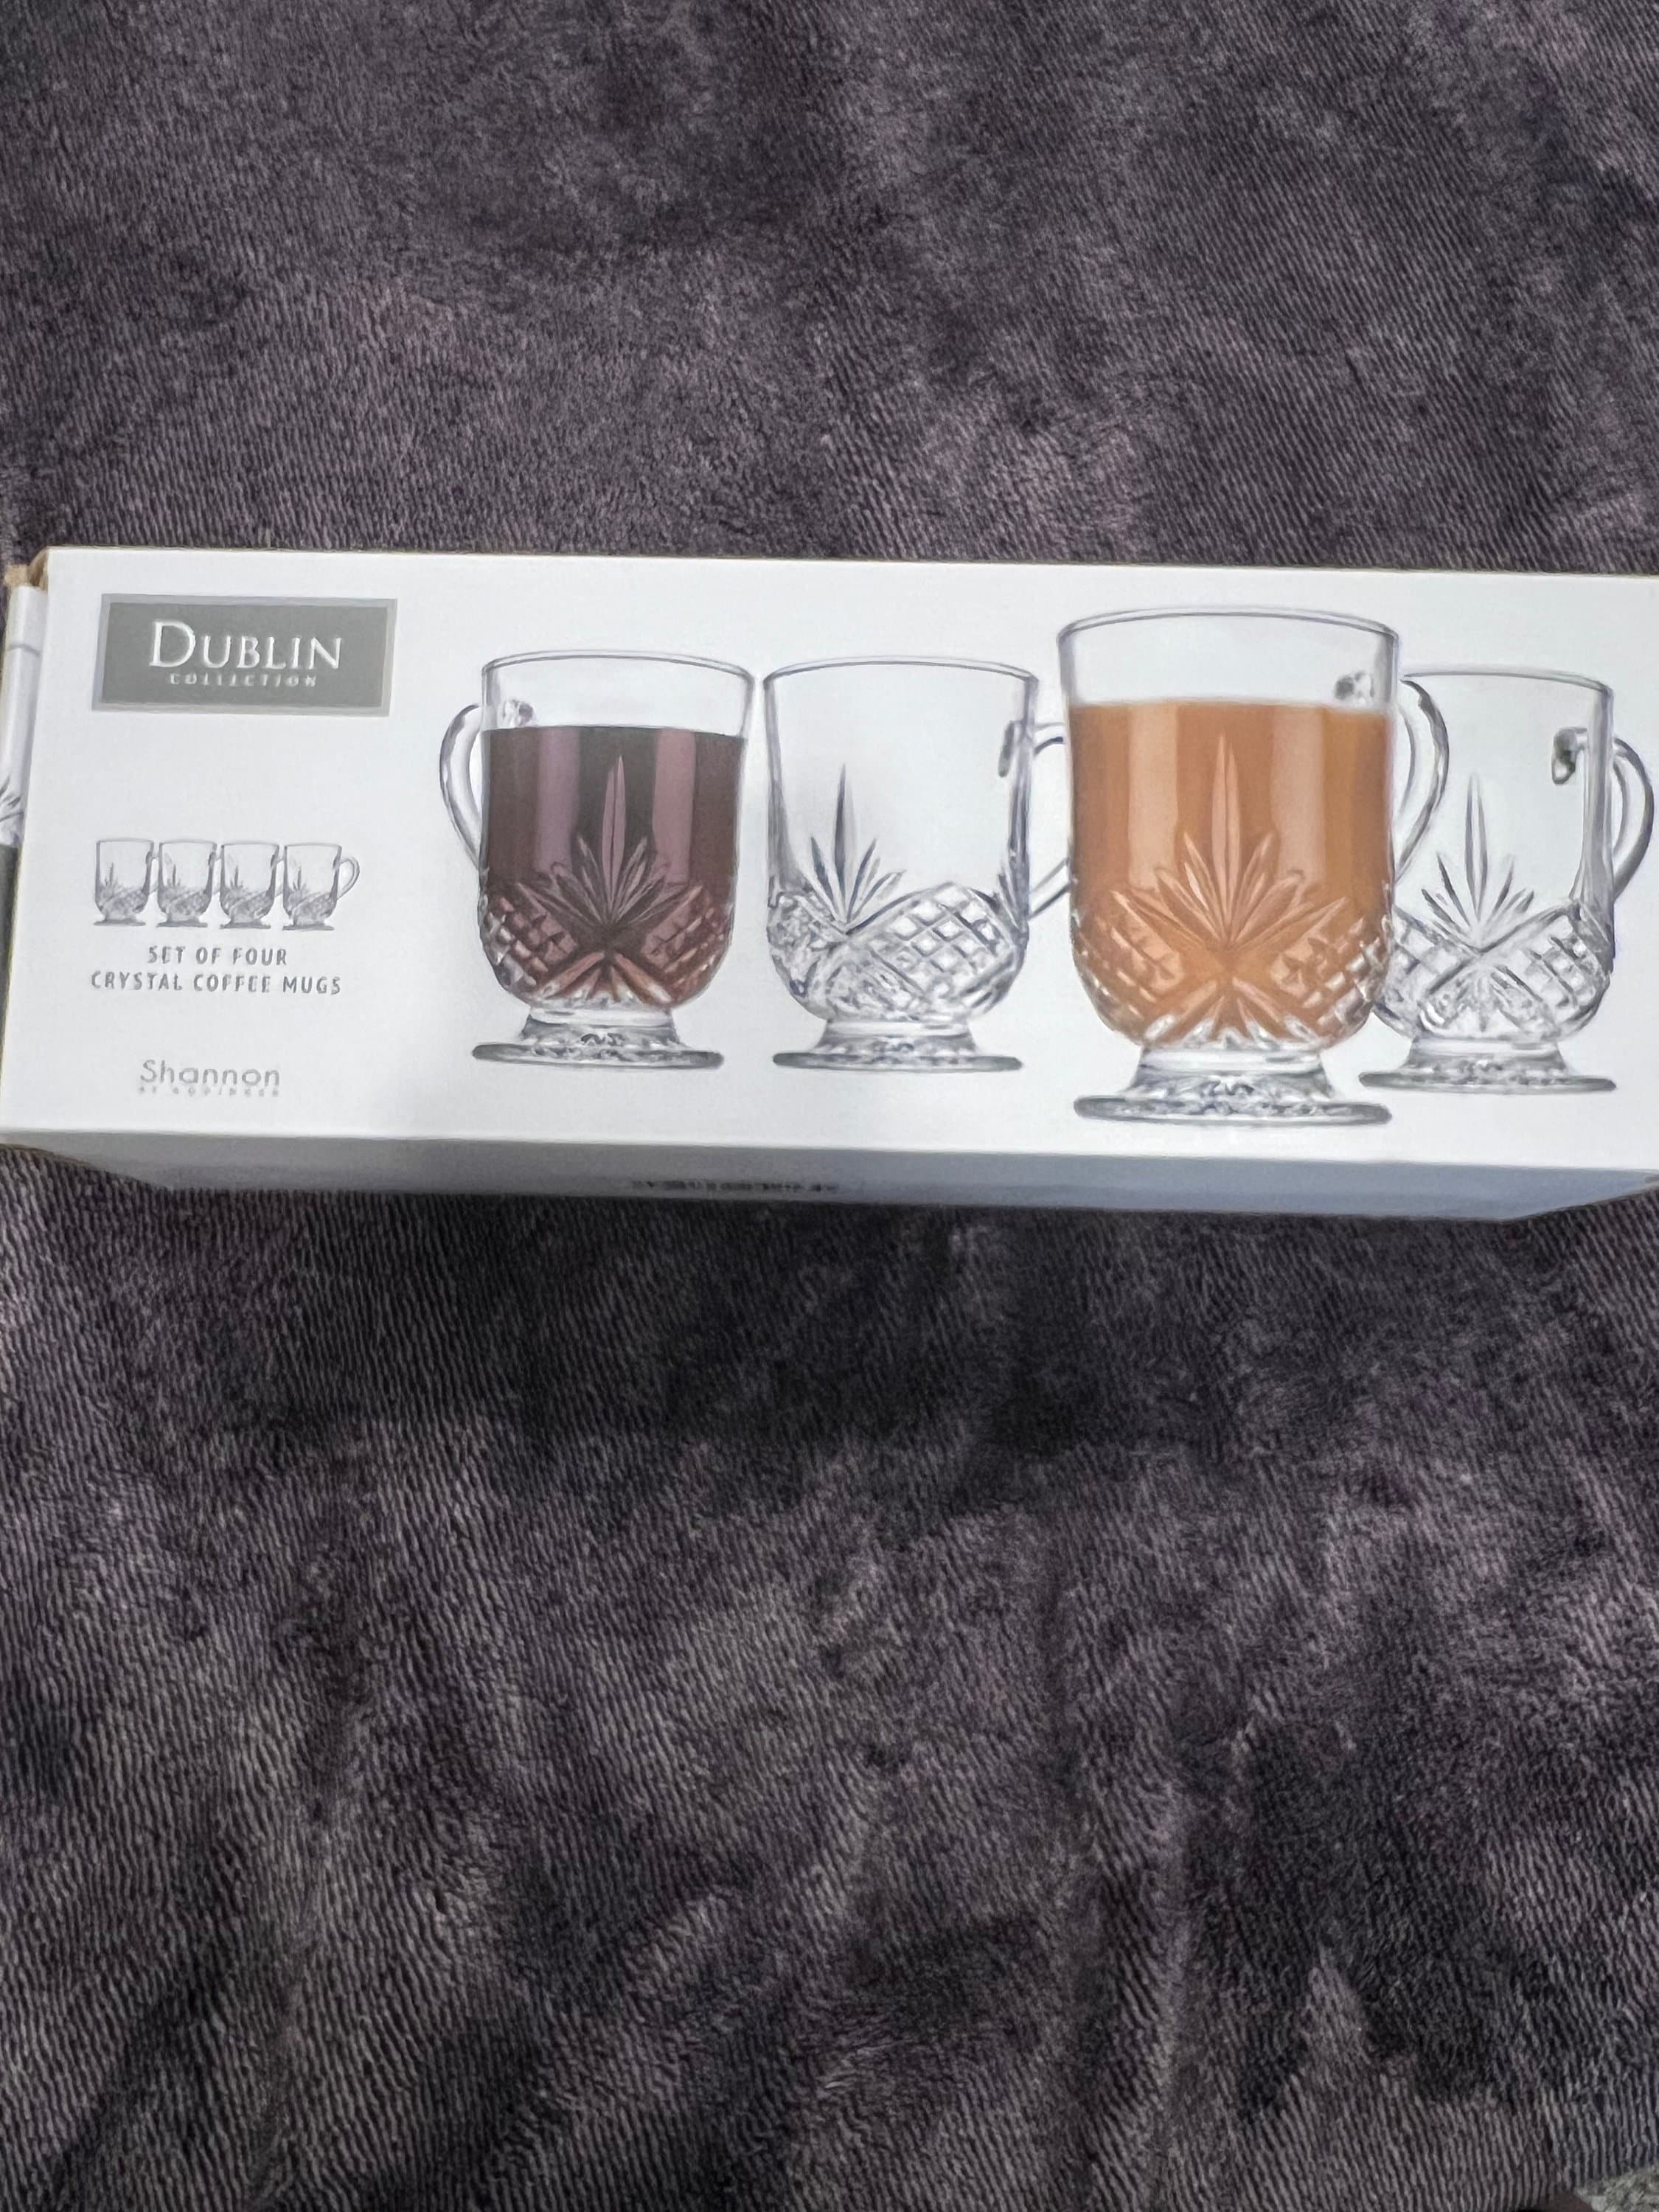 Godinger Shannon Crystal Designs of Ireland Coffee Mug new 